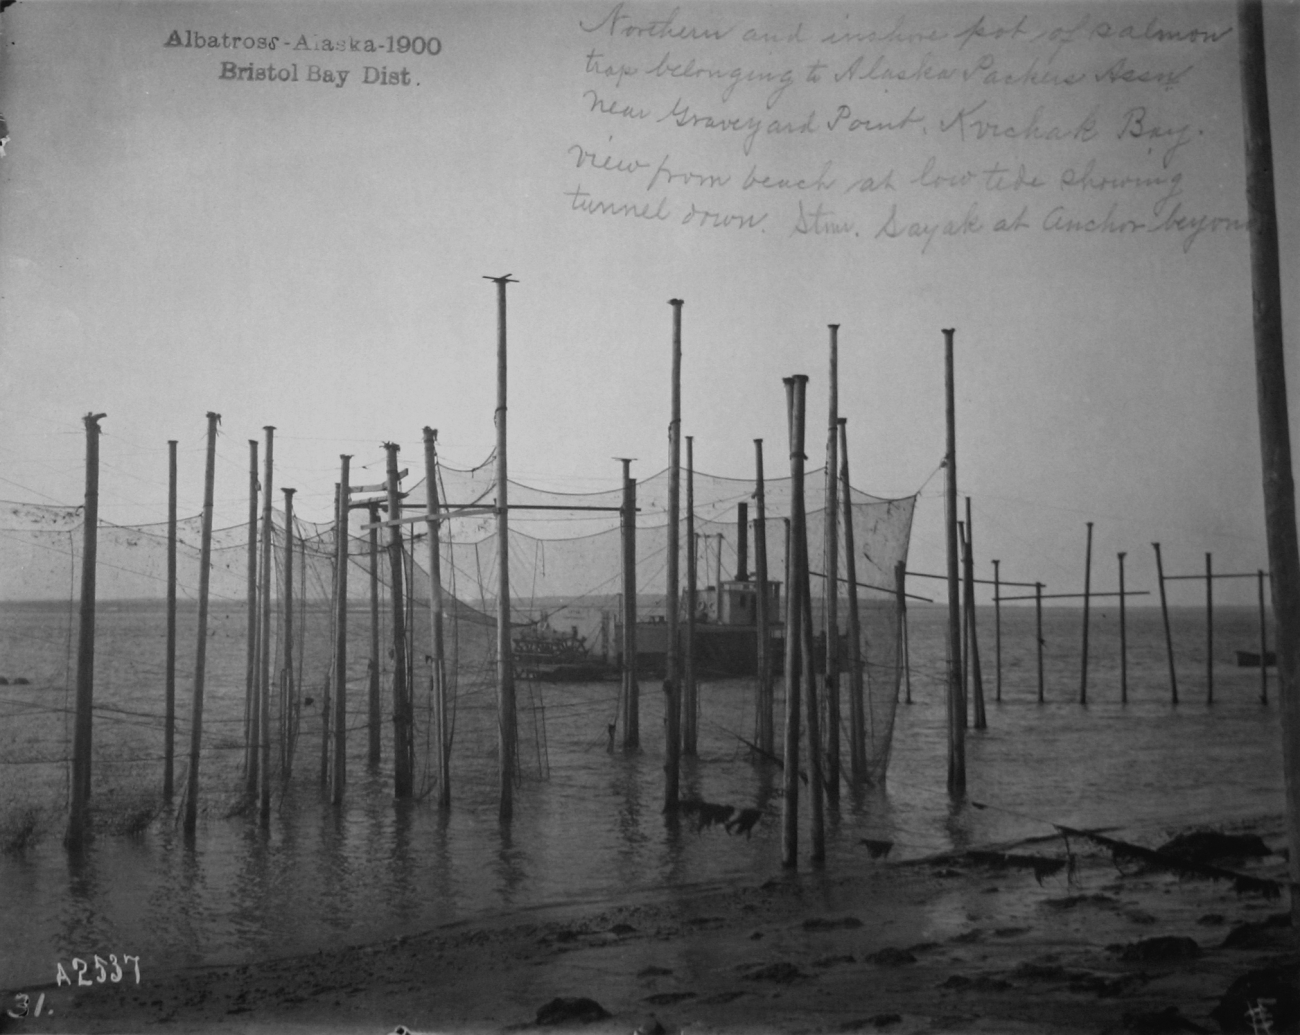 Albatross, AK, 1900, Bristol Bay district, northern and inshore pot of salmontrap belonging to Alaska Packers Assn